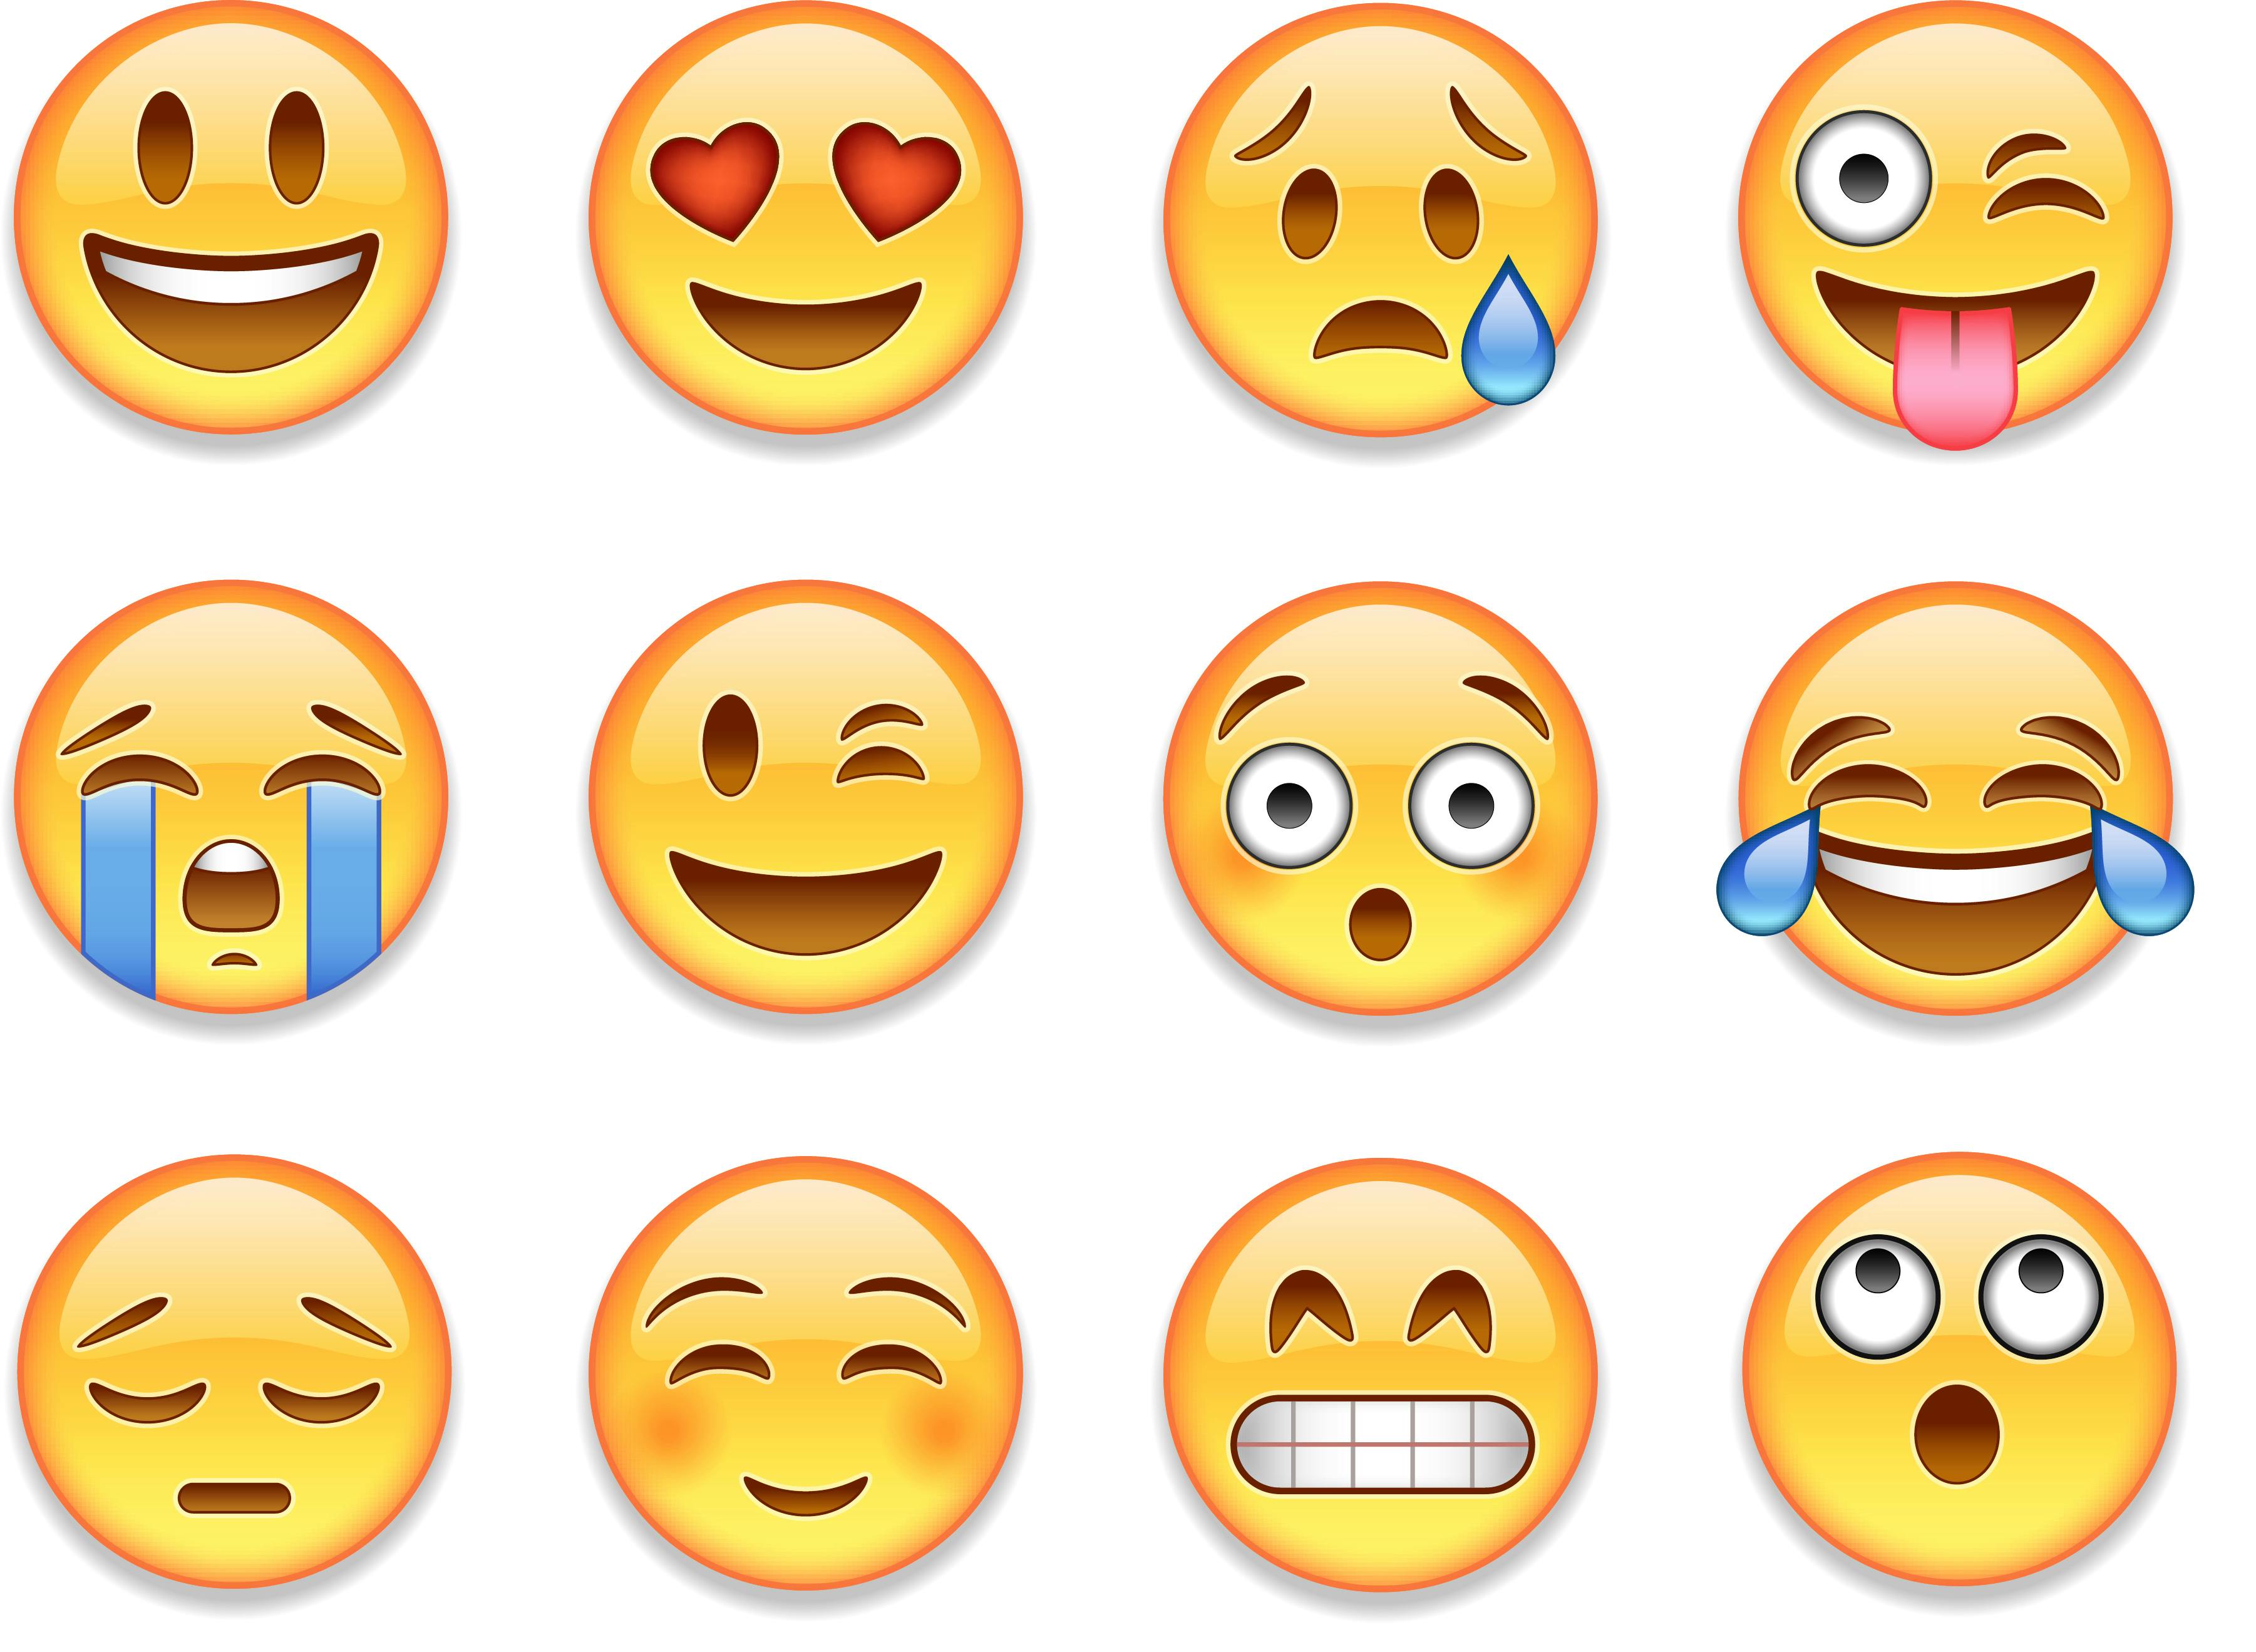 Is An Emoji Worth A Thousand Words Star Tribune